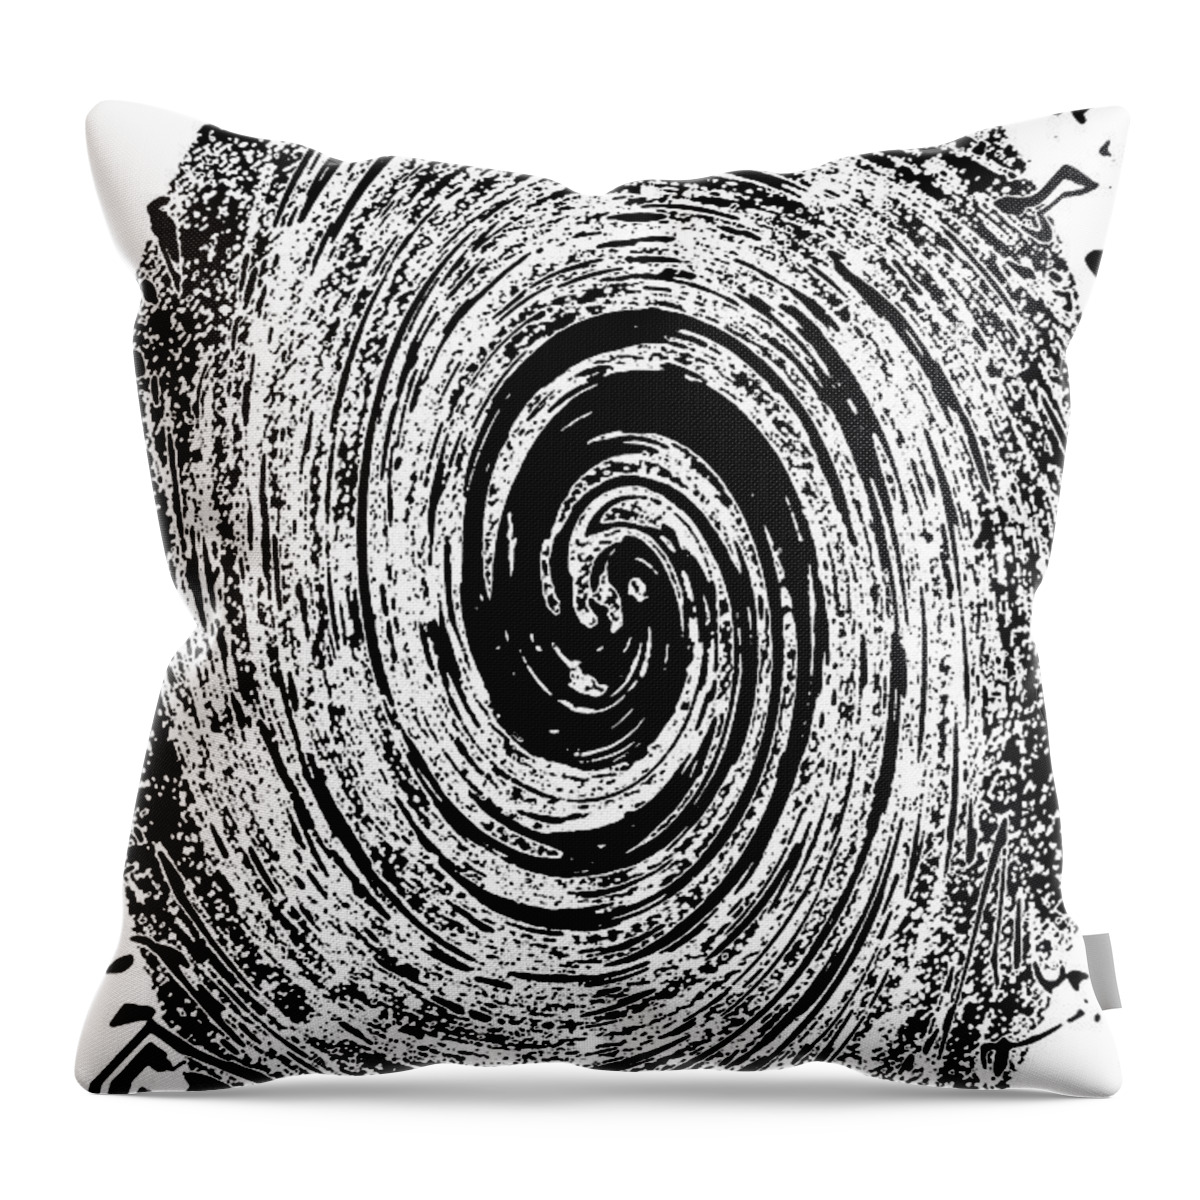 Hurricane Windy Throw Pillow featuring the digital art Hurricane Windy by Tom Janca